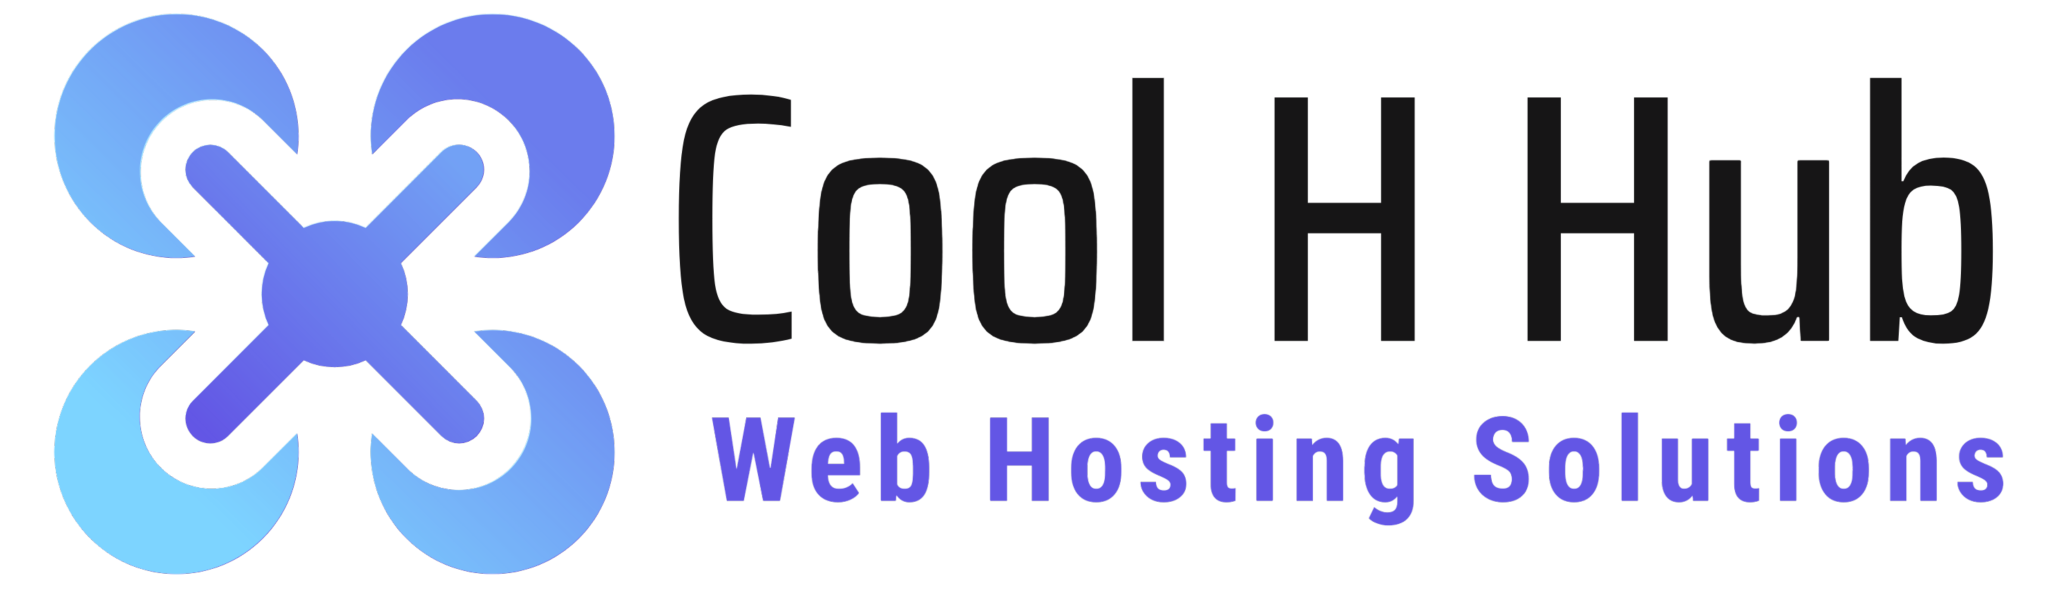 Cool H Hub